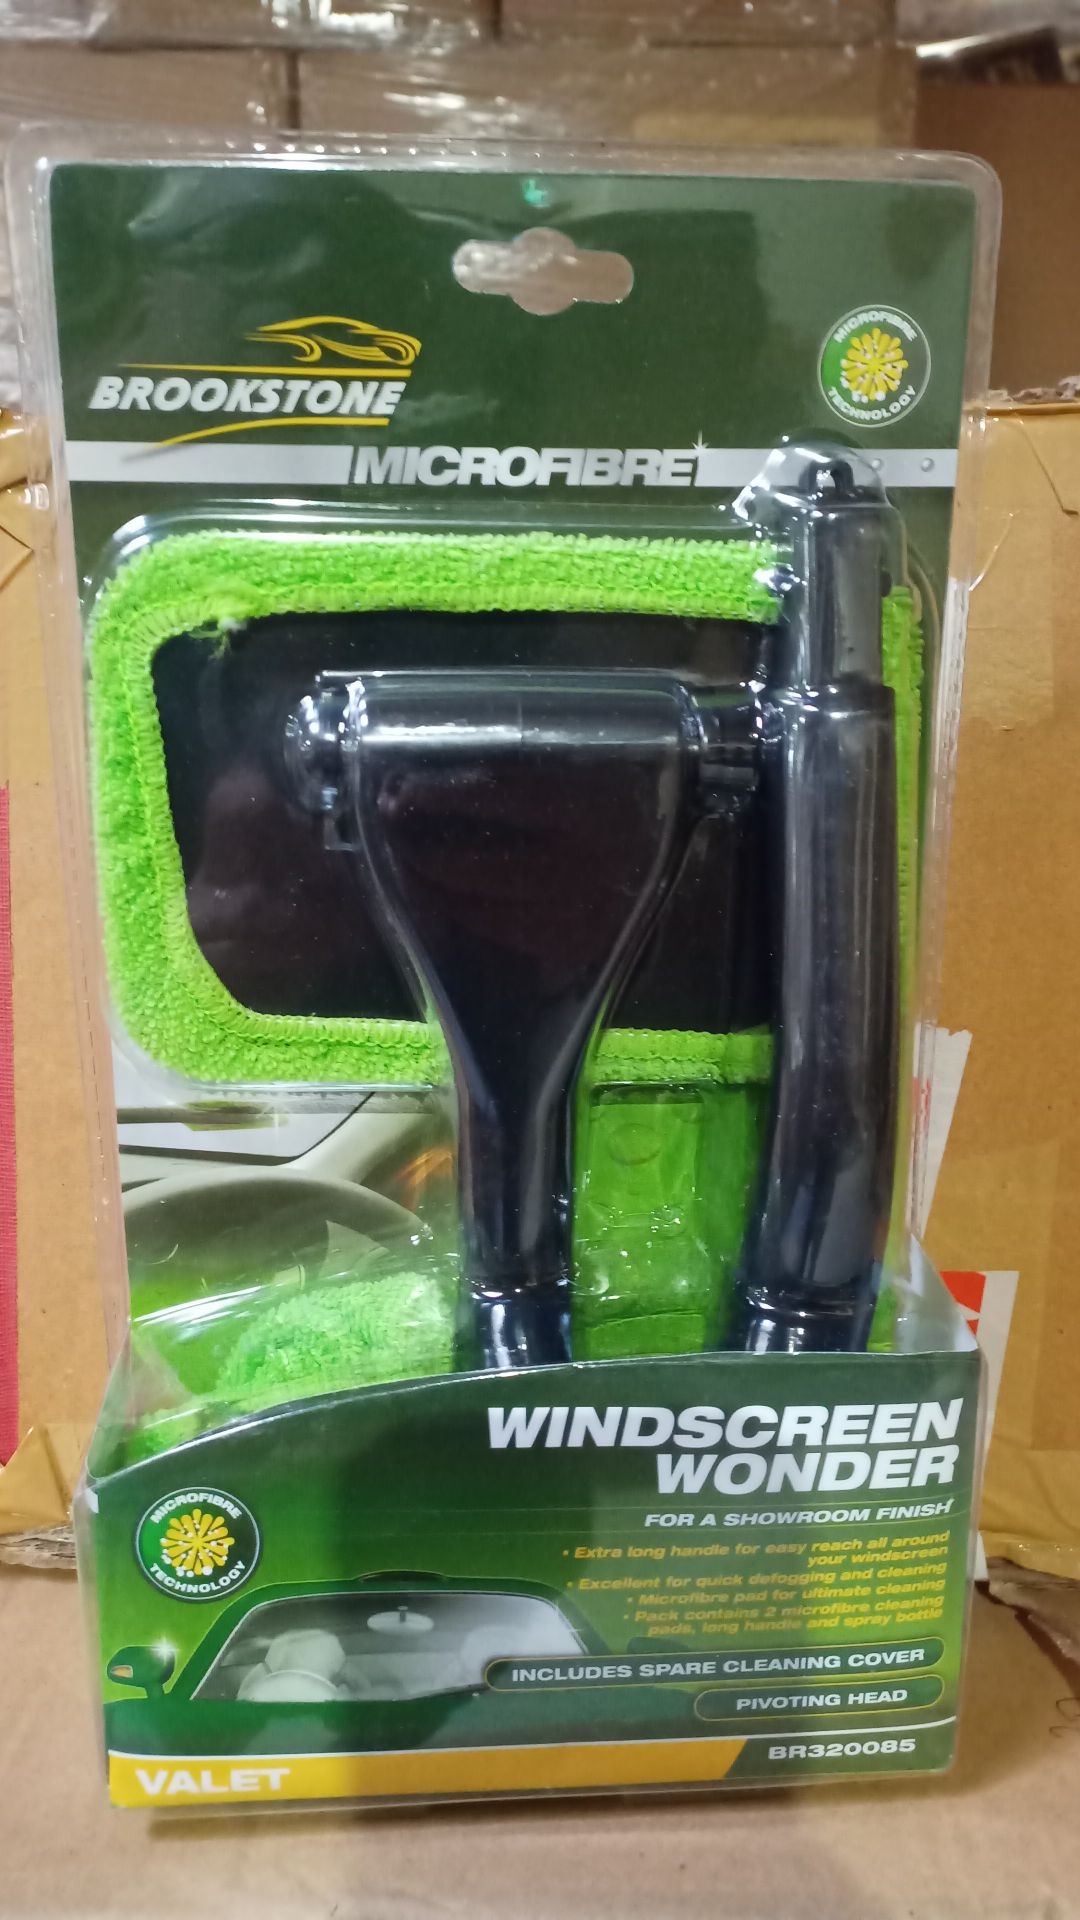 20 x Brookstone Microfibre Windscreen Wonder | Total RRP £300